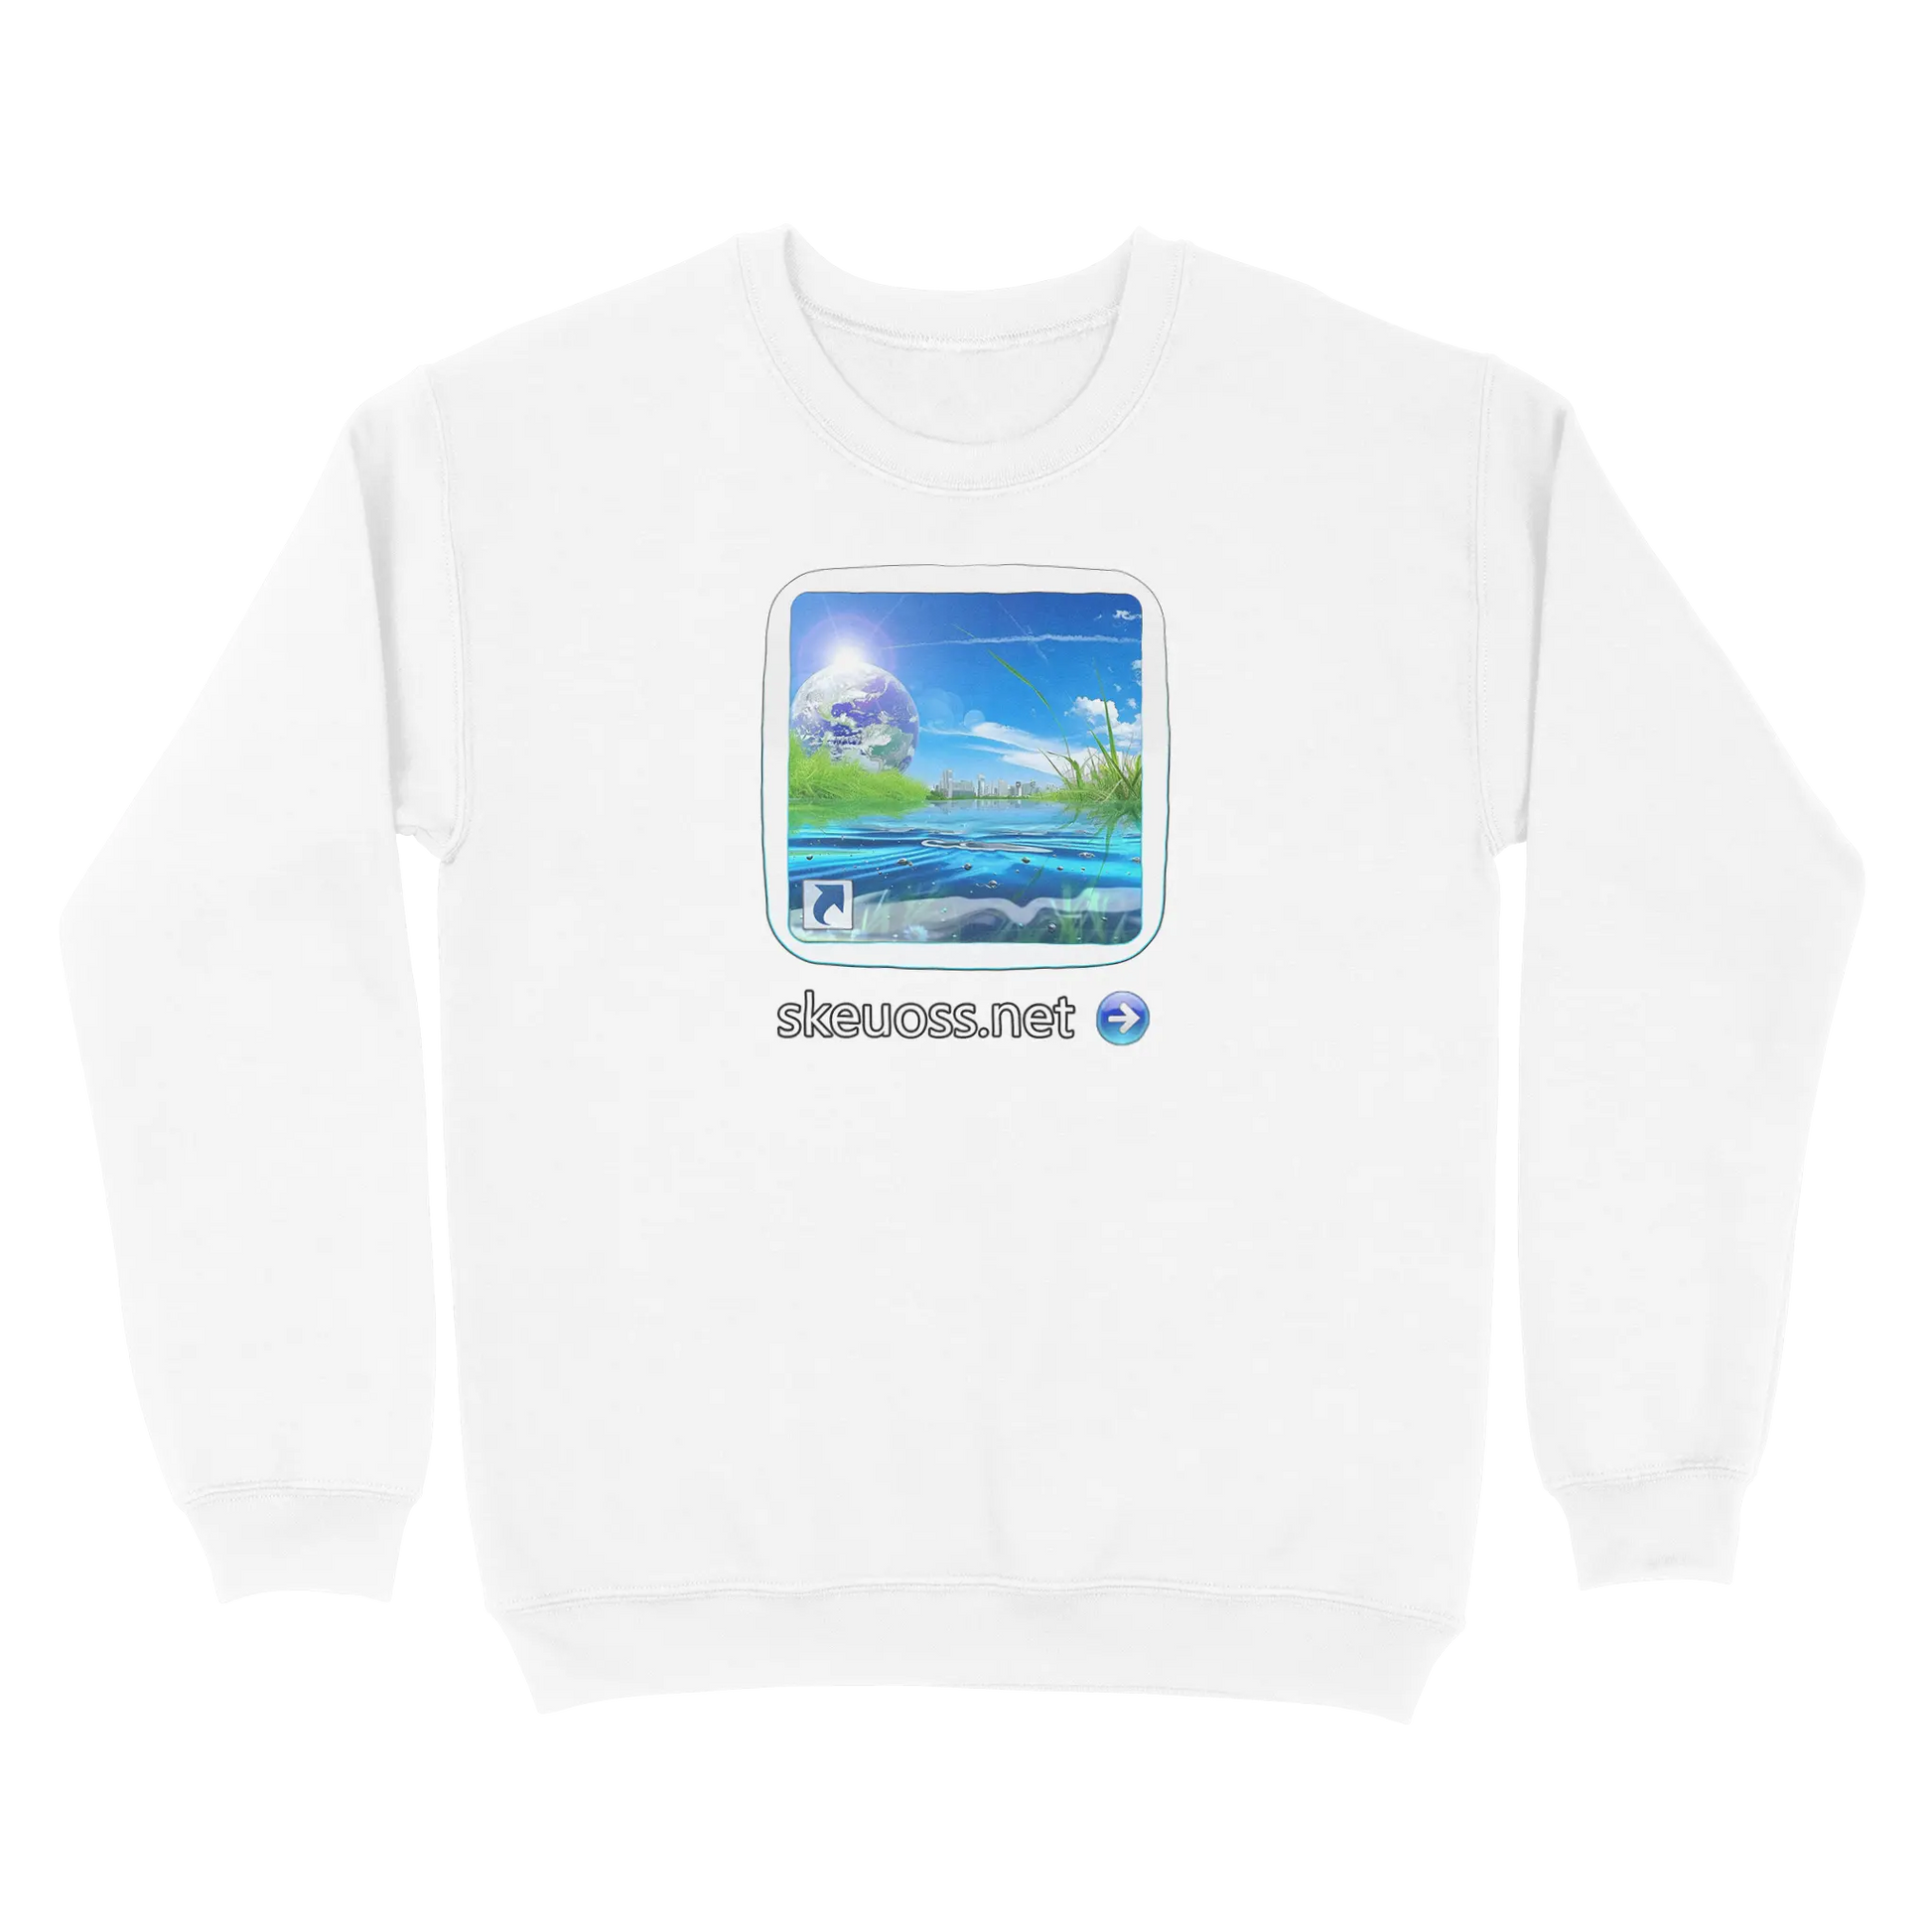 Frutiger Aero Sweatshirt - User Login Collection - User 340